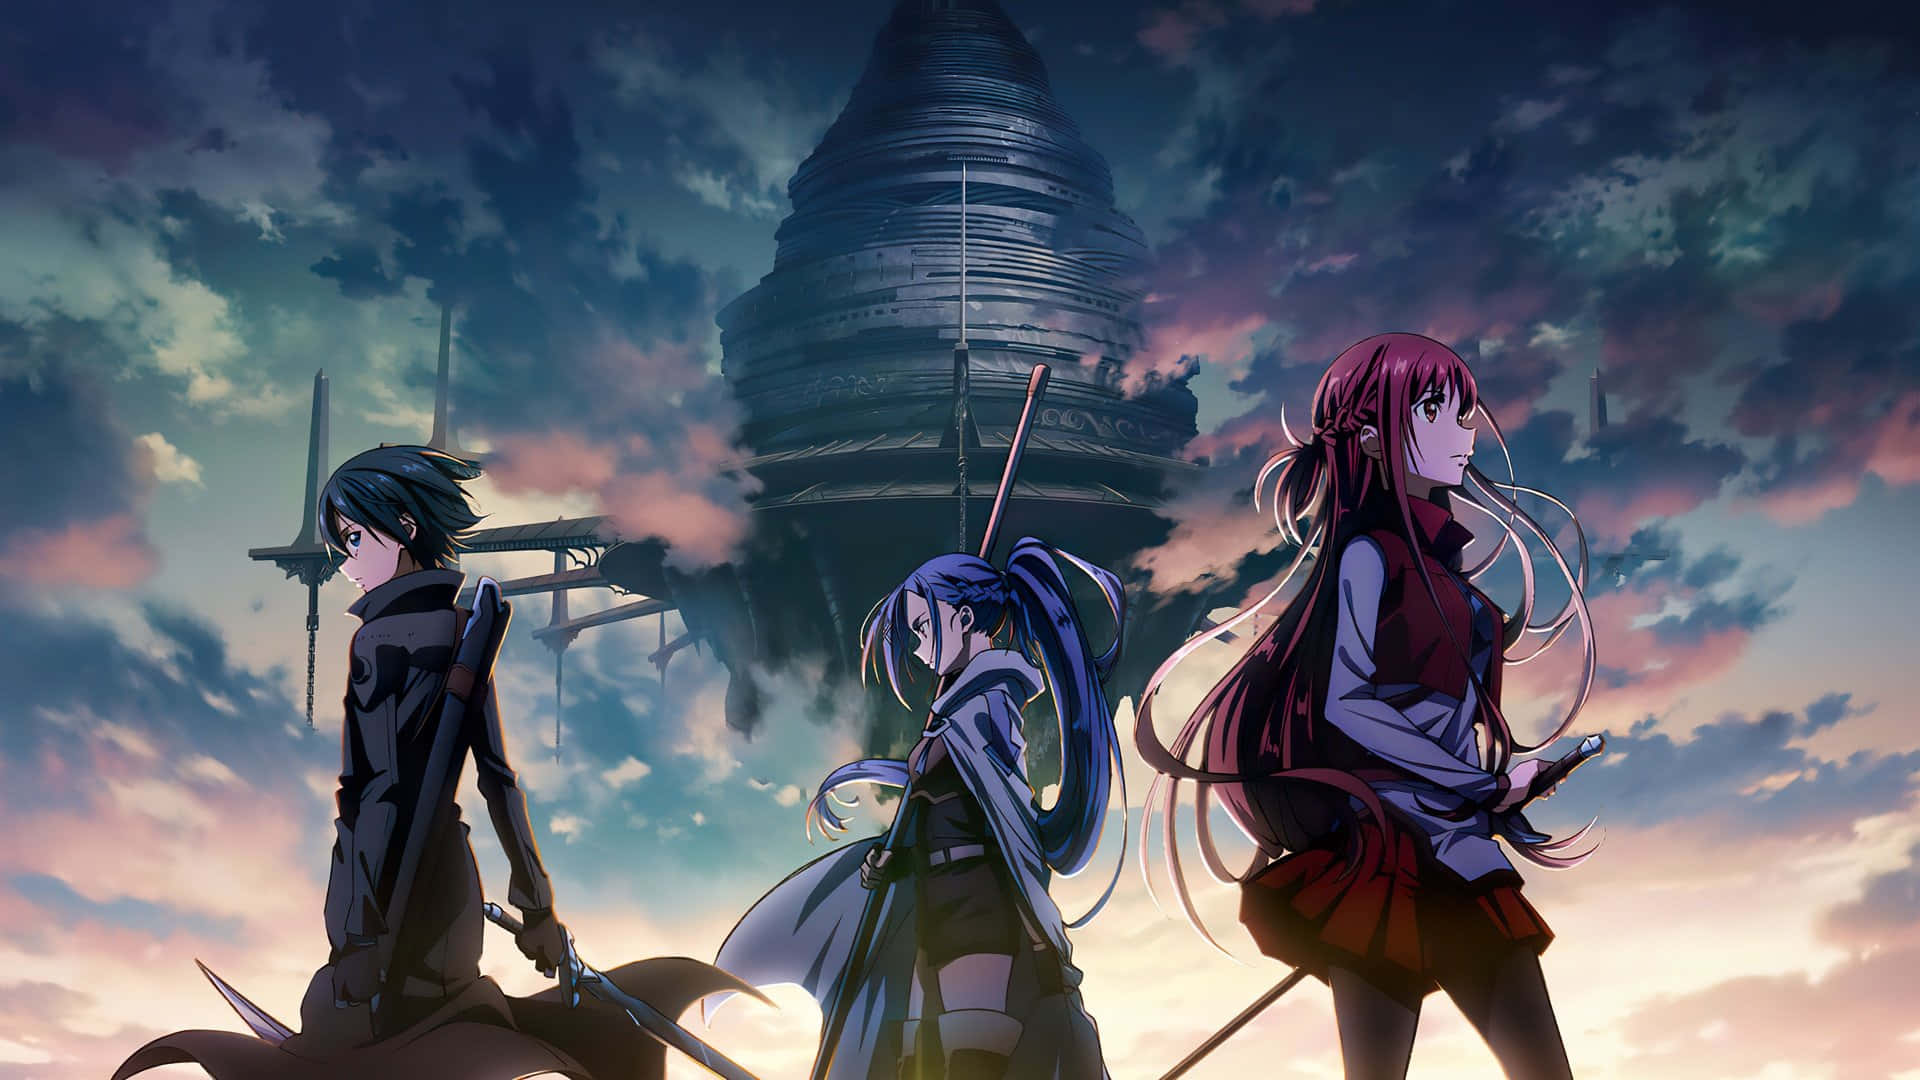 Kirito and Asuna, protagonists of Sword Art Online